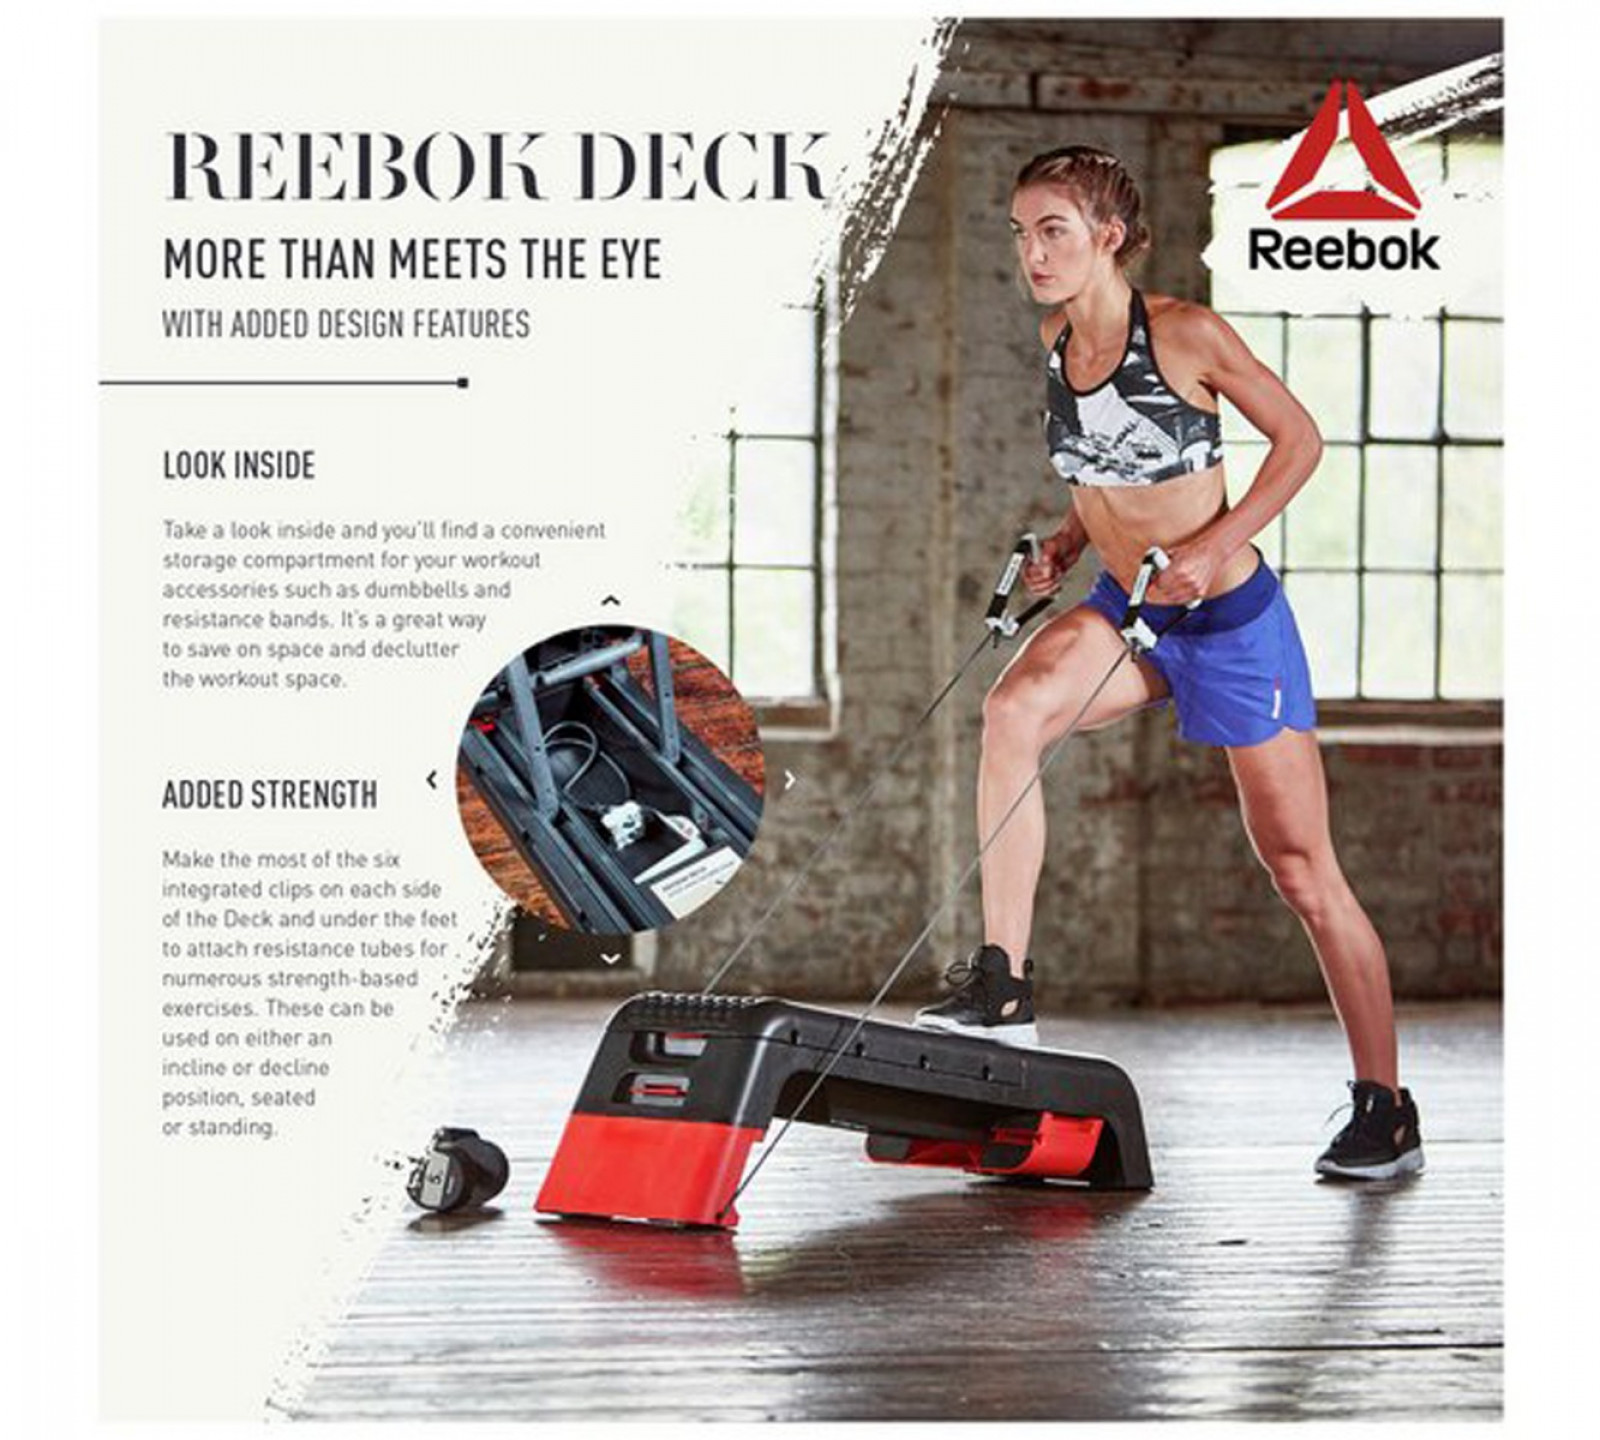 reebok deck aerobic step and training bench